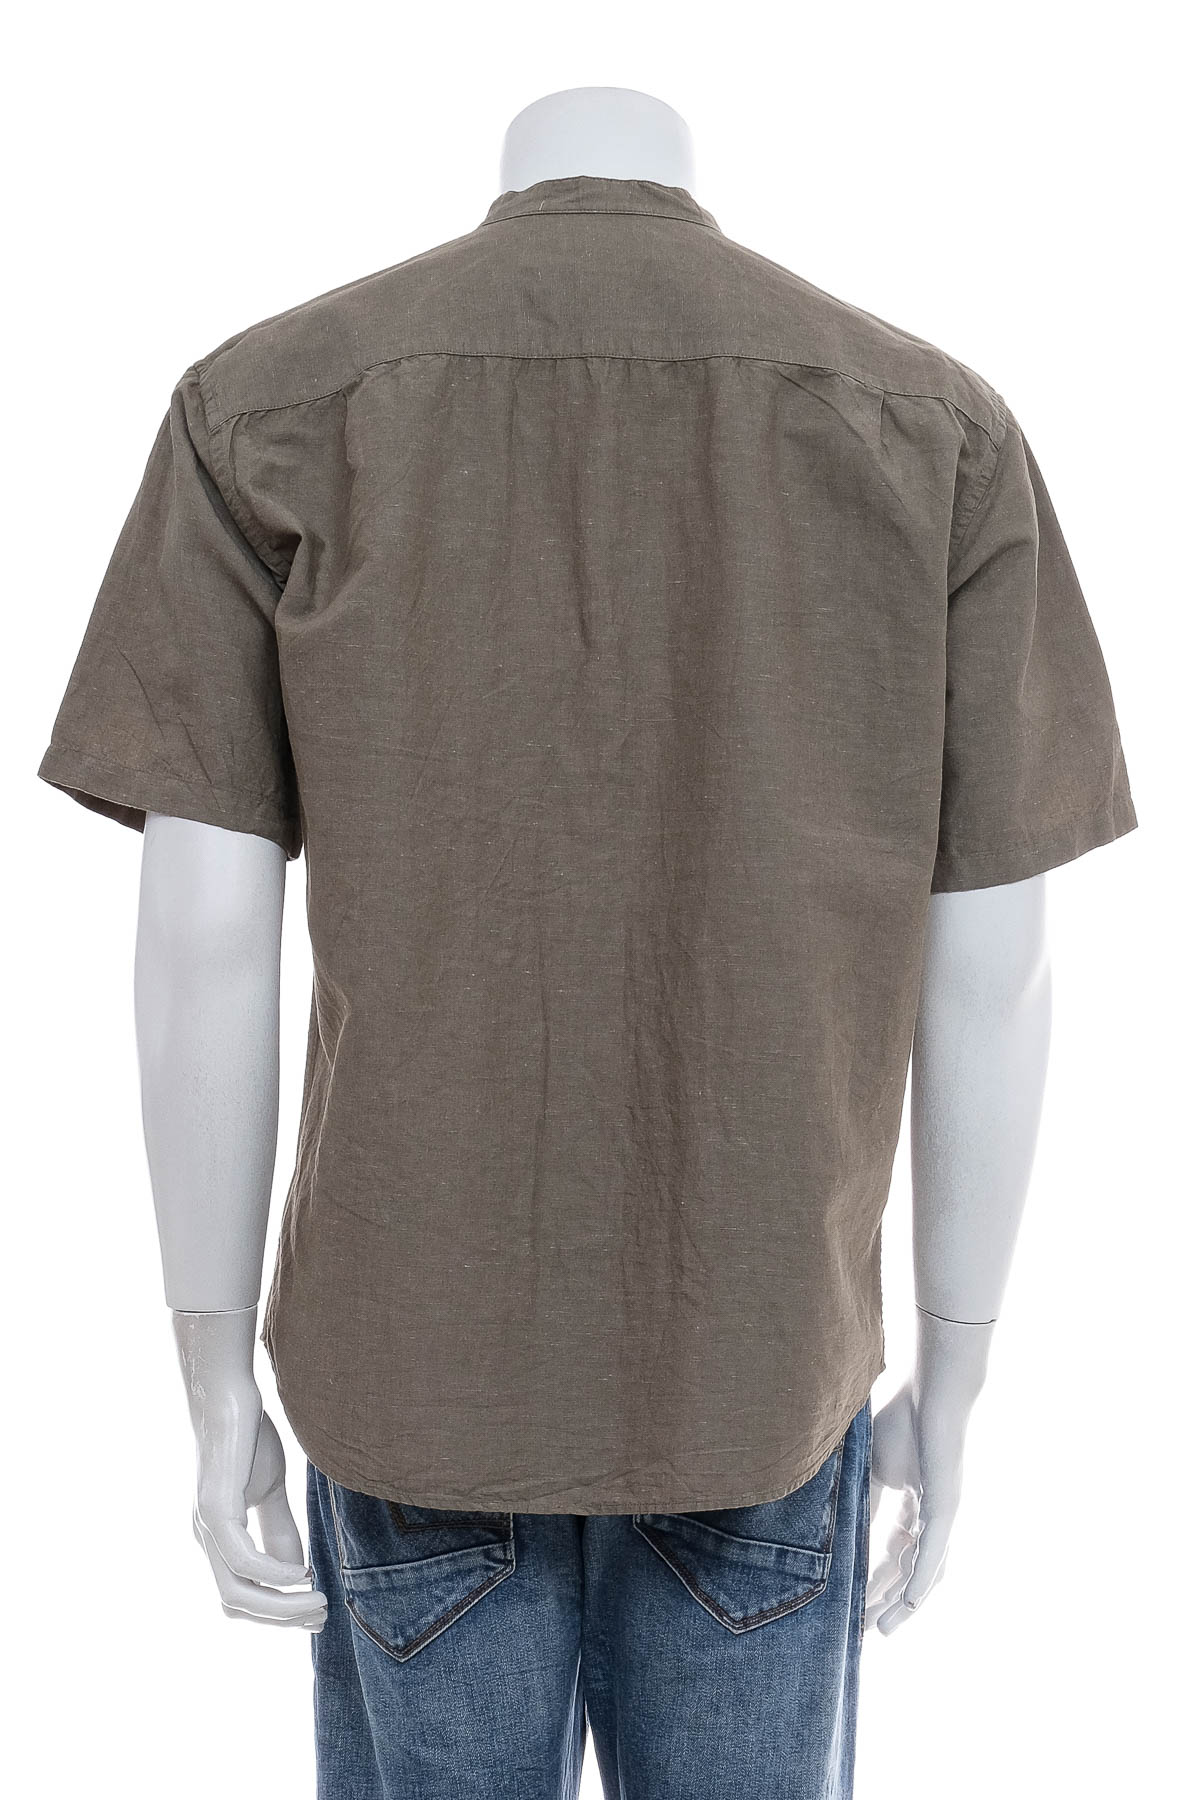 Men's shirt - UNIQLO - 1